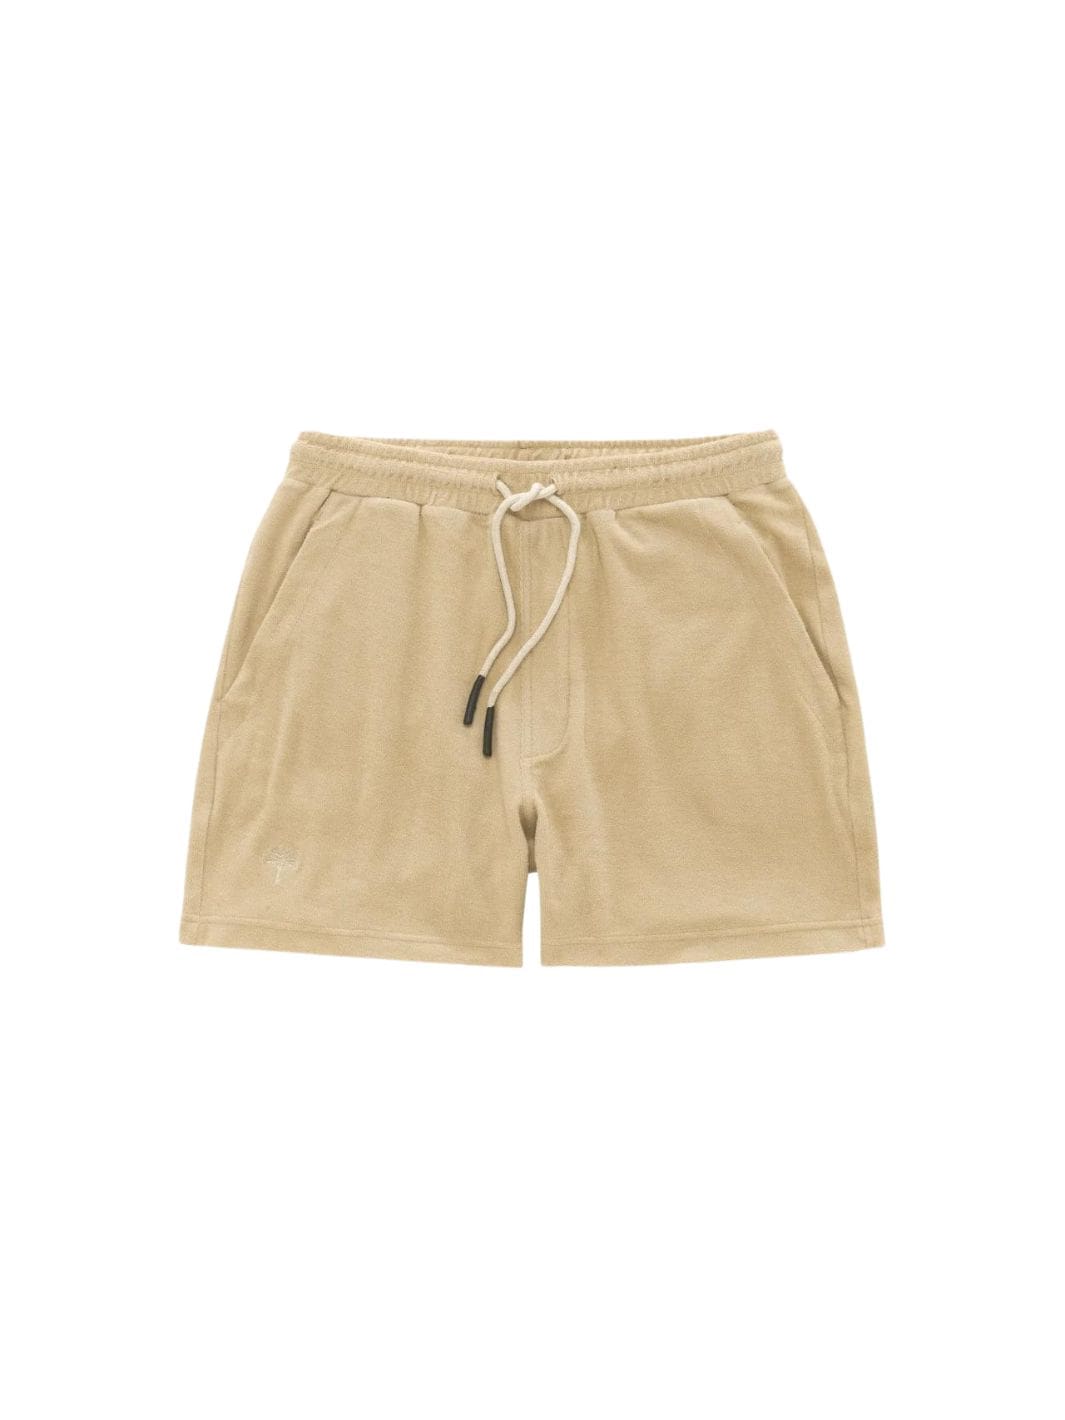 Oas Shorts Shorts | Terry Shorts Beige